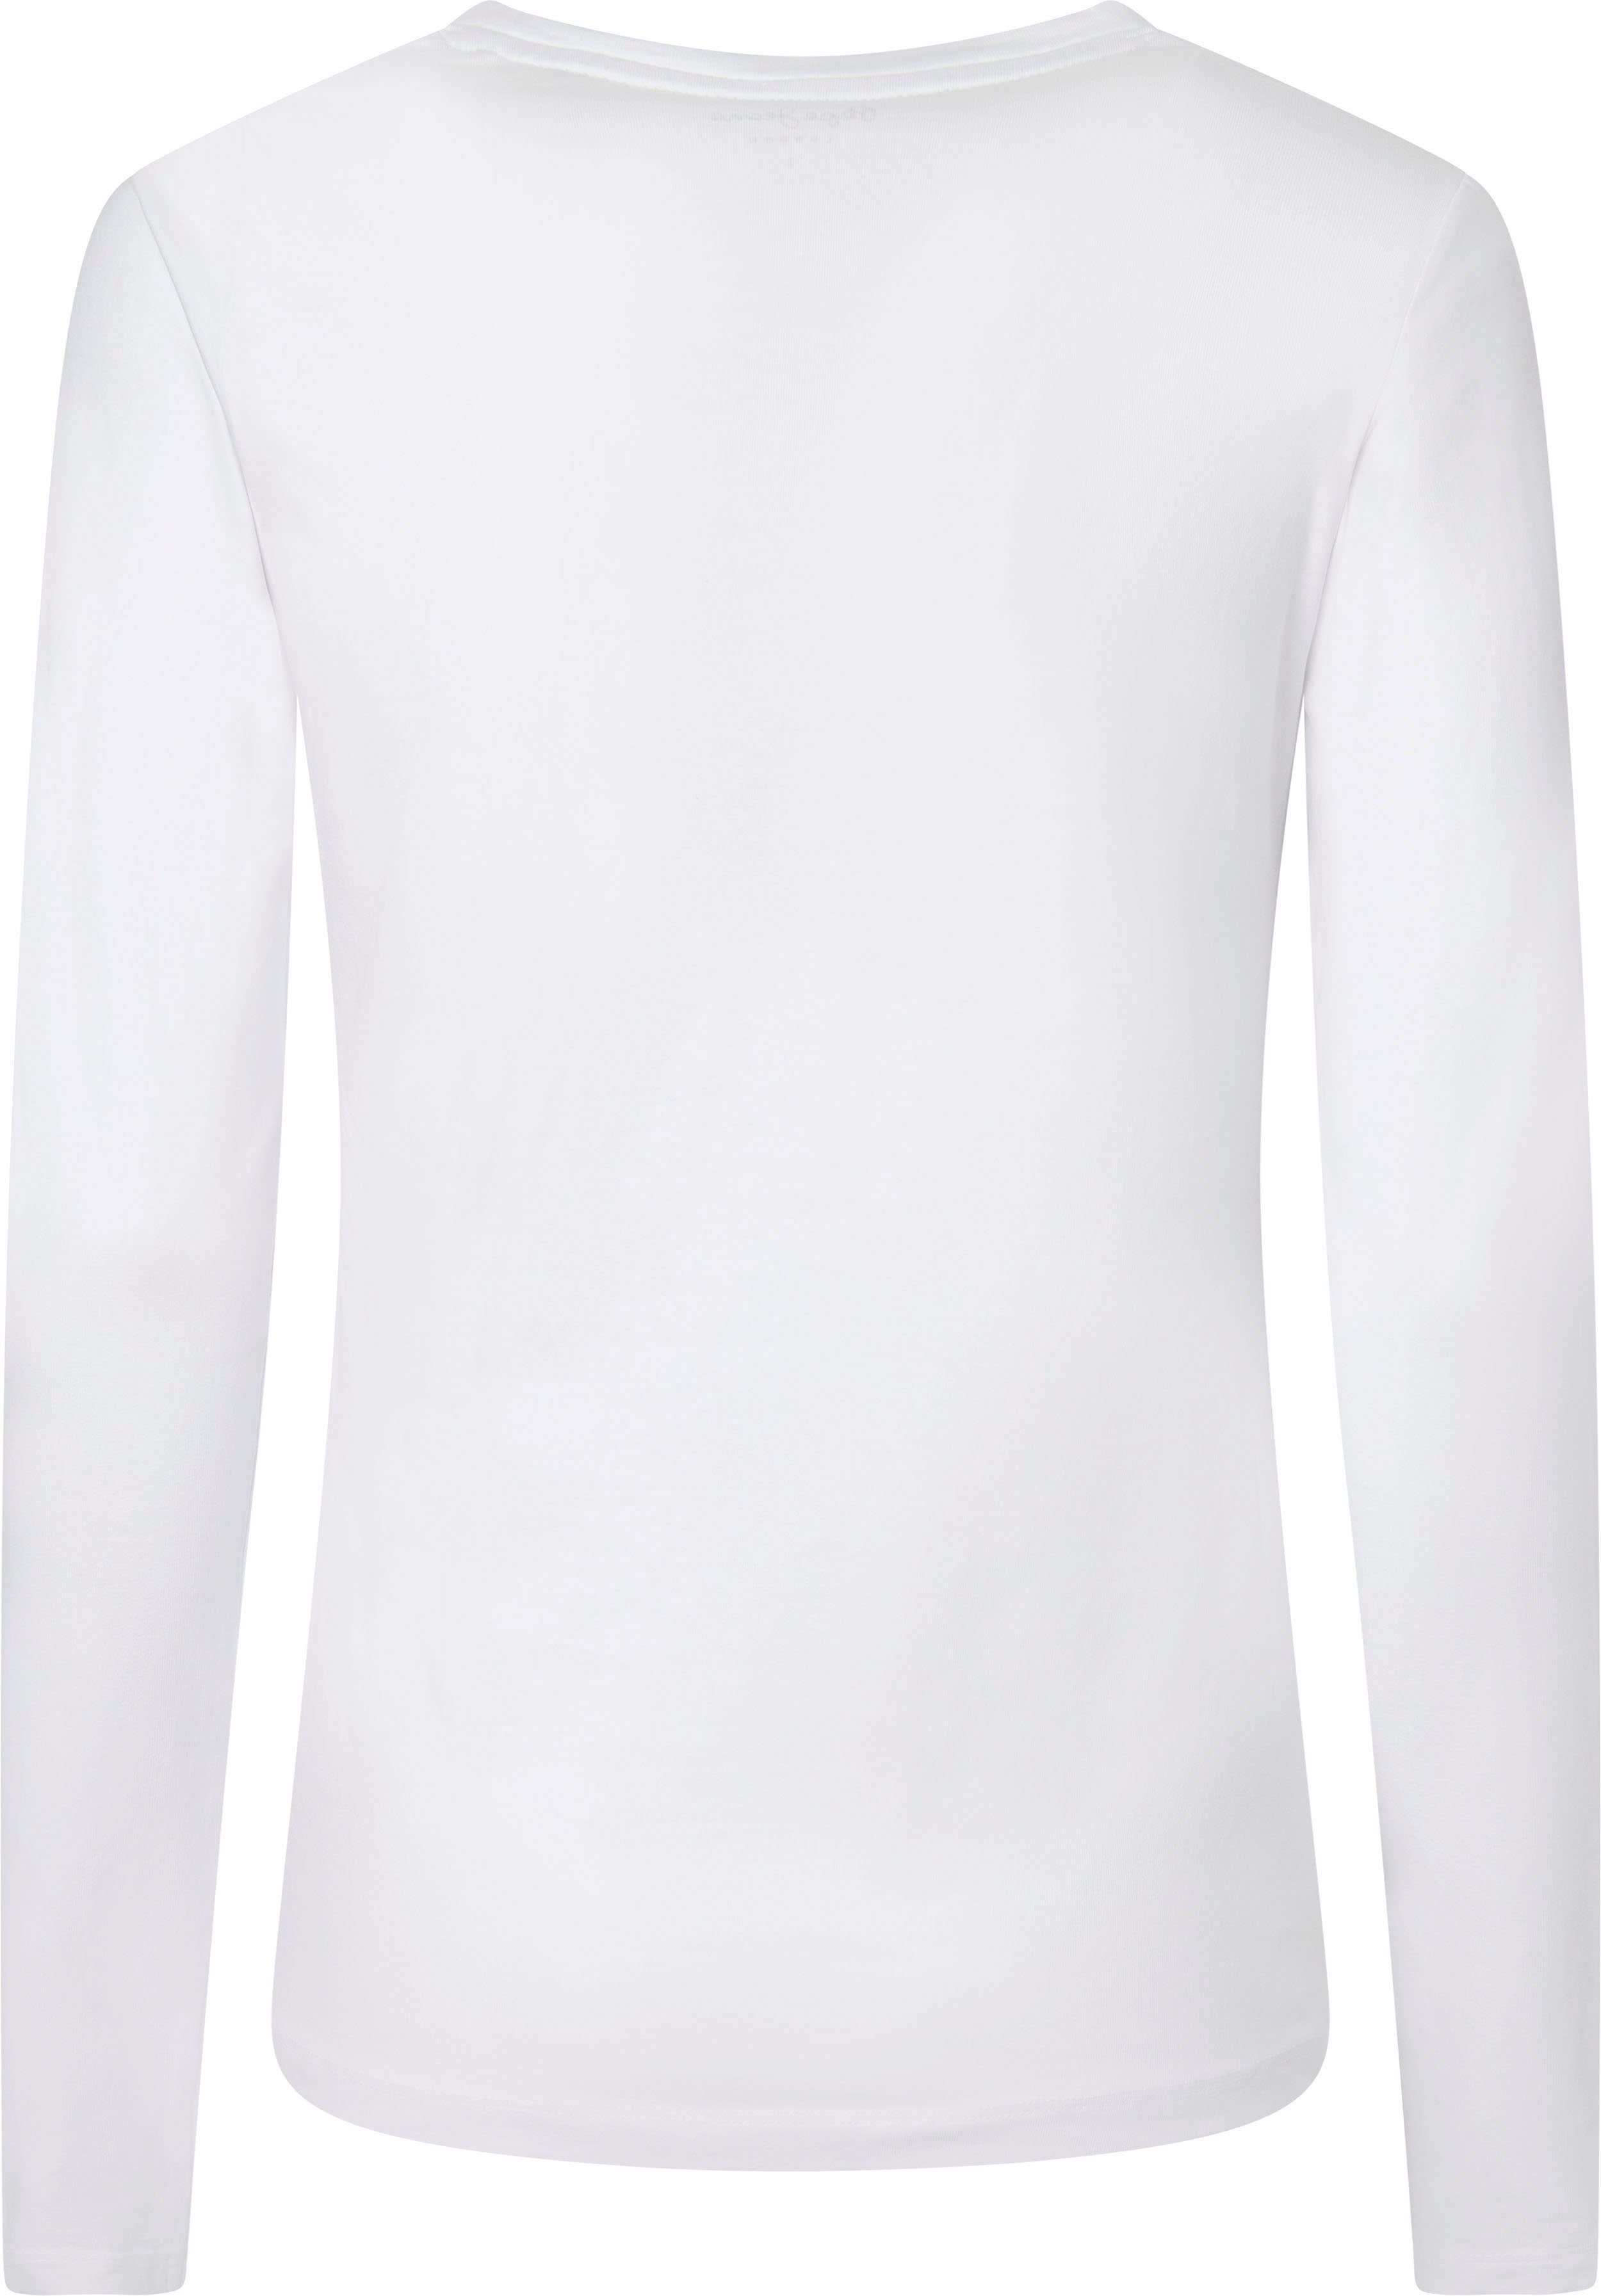 Pepe Jeans mit 8WHITE Brustbereich Langarmshirt kleinem im N Marken-Logo-Print AMBERTA